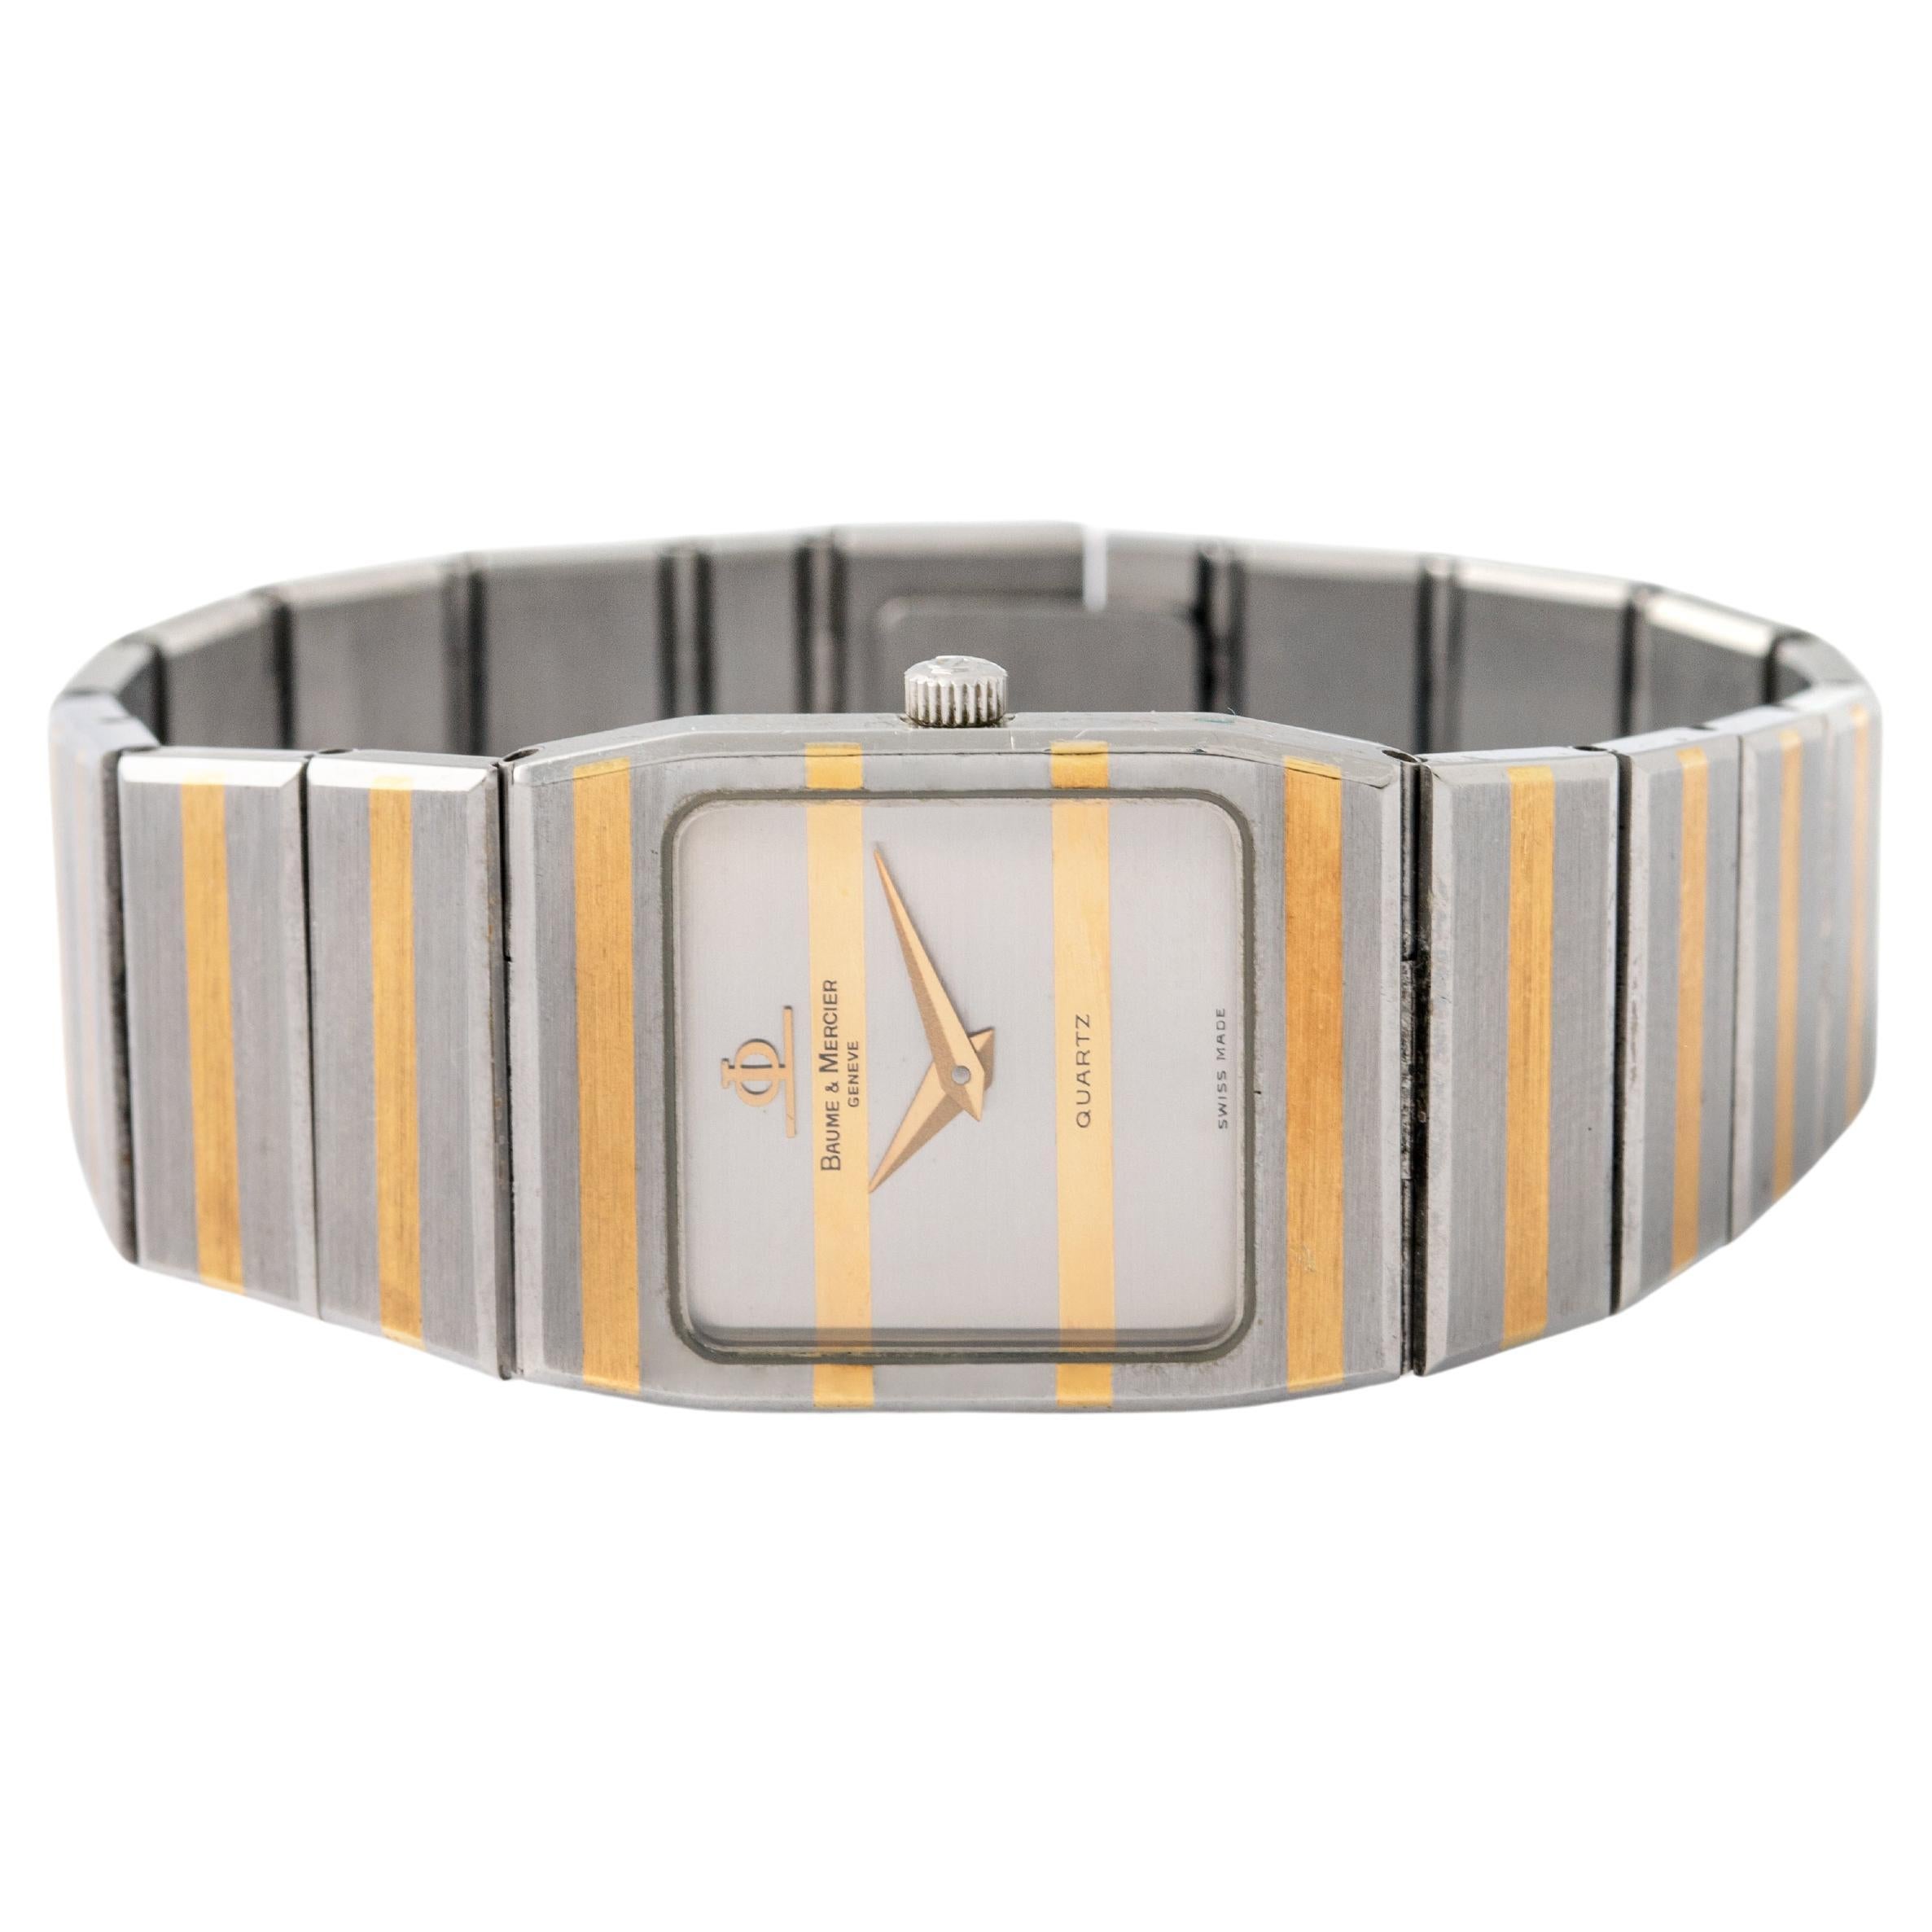 Baume & Mercier Classique Monte Carlo Stainless Steel Wristwatch For Sale